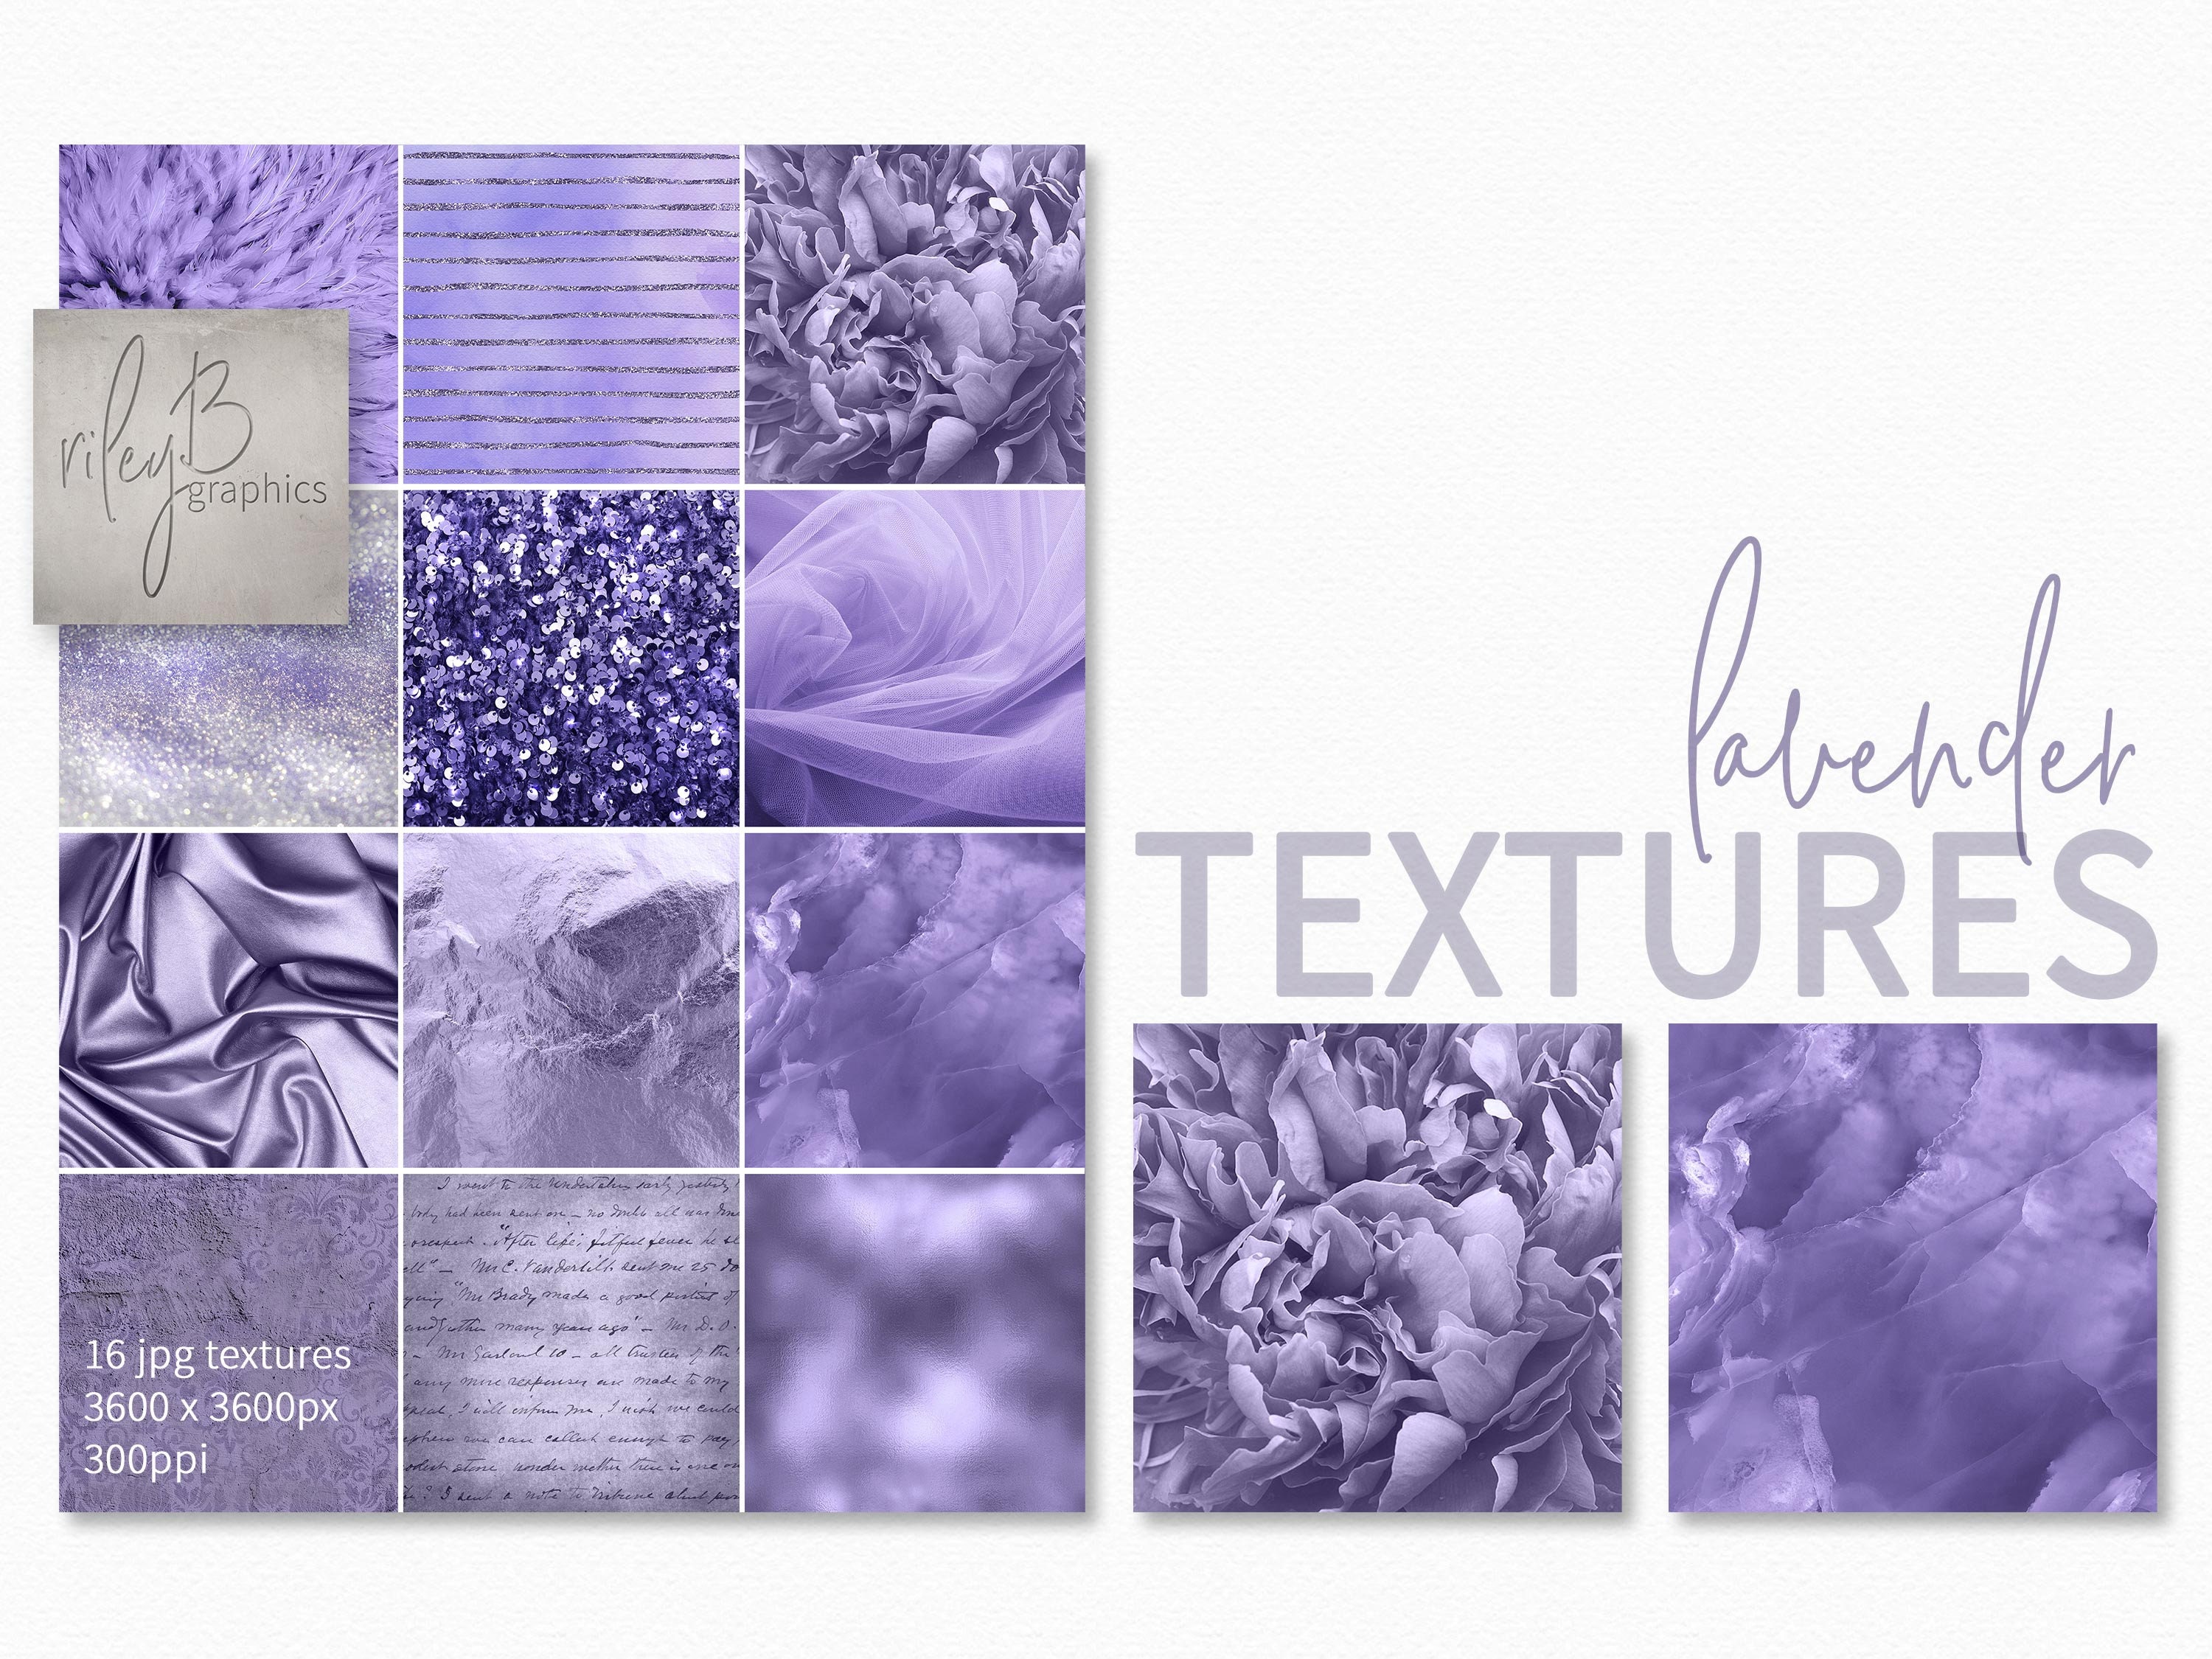 White Flower Pedals Over Purple Grunge Surface - Skin Decal Vinyl